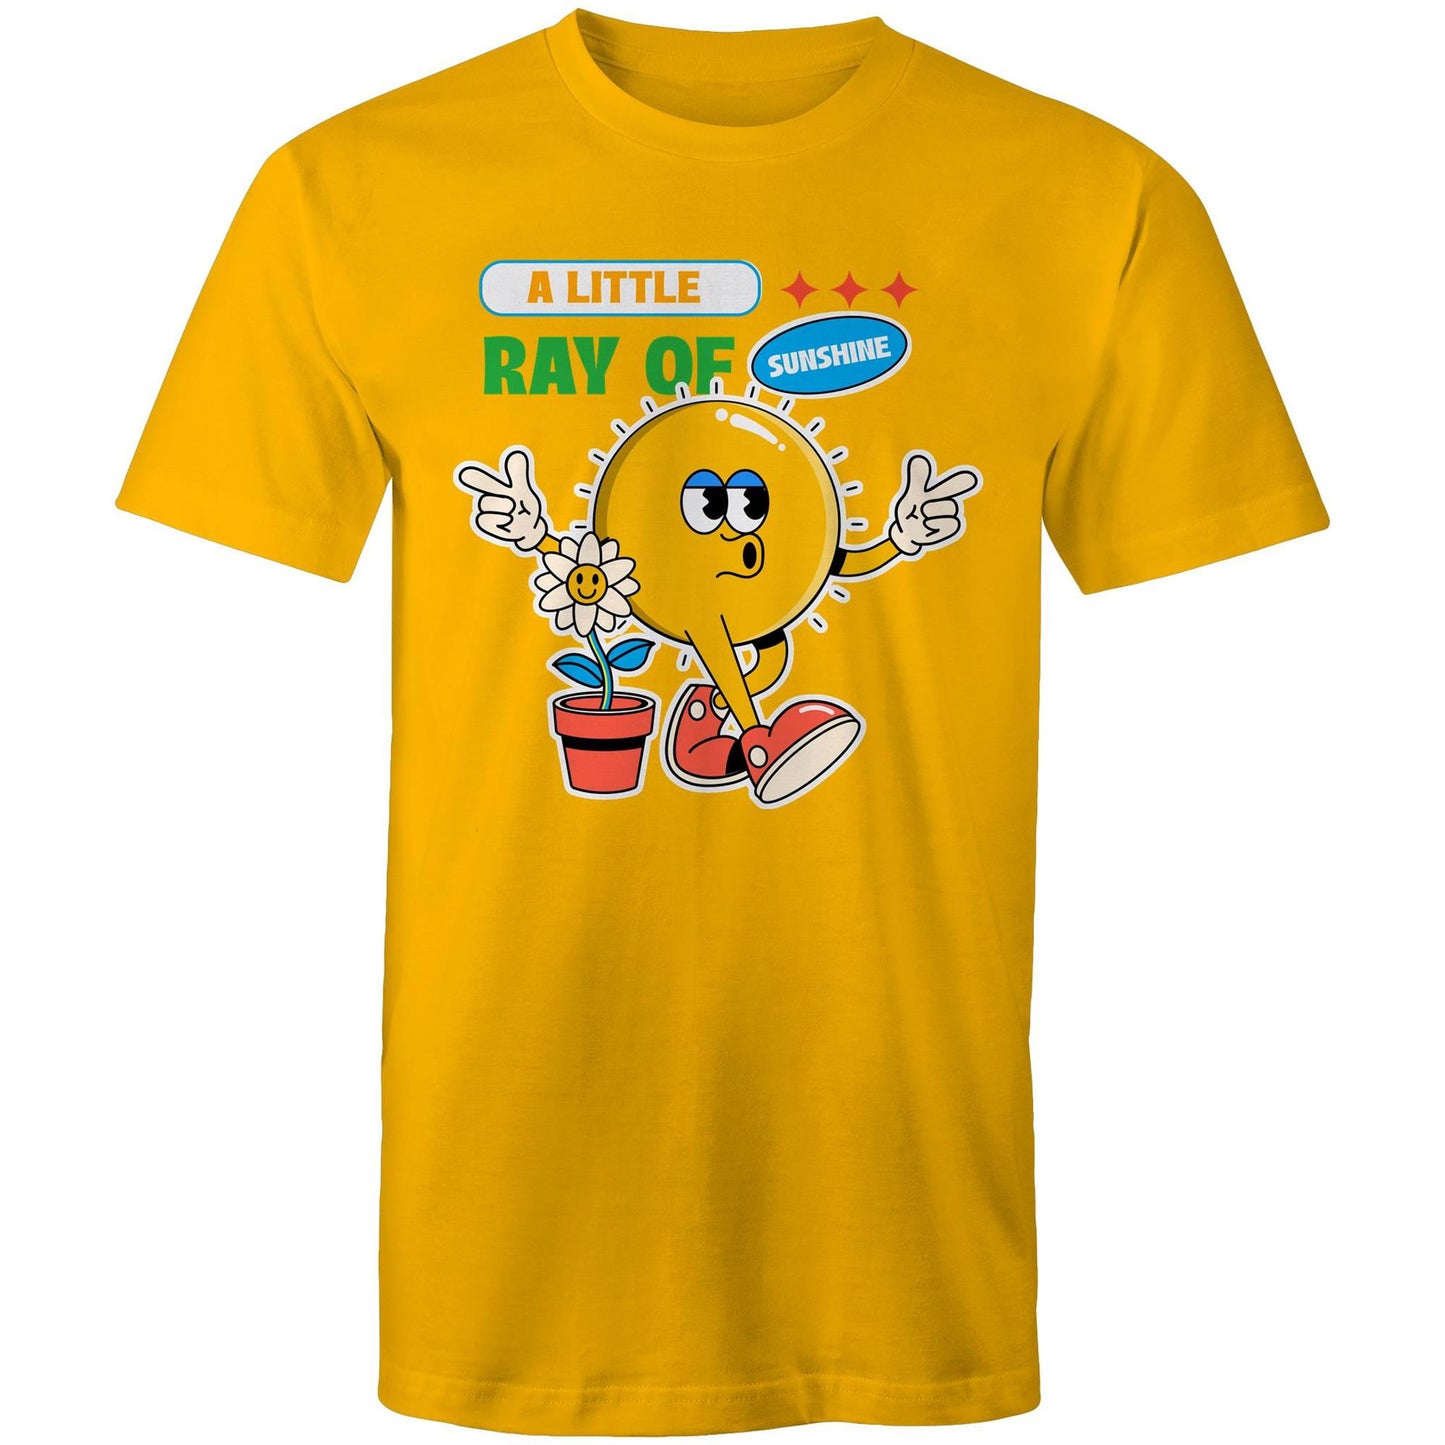 A Little Ray Of Sunshine - Mens T-Shirt Gold Mens T-shirt Retro Summer